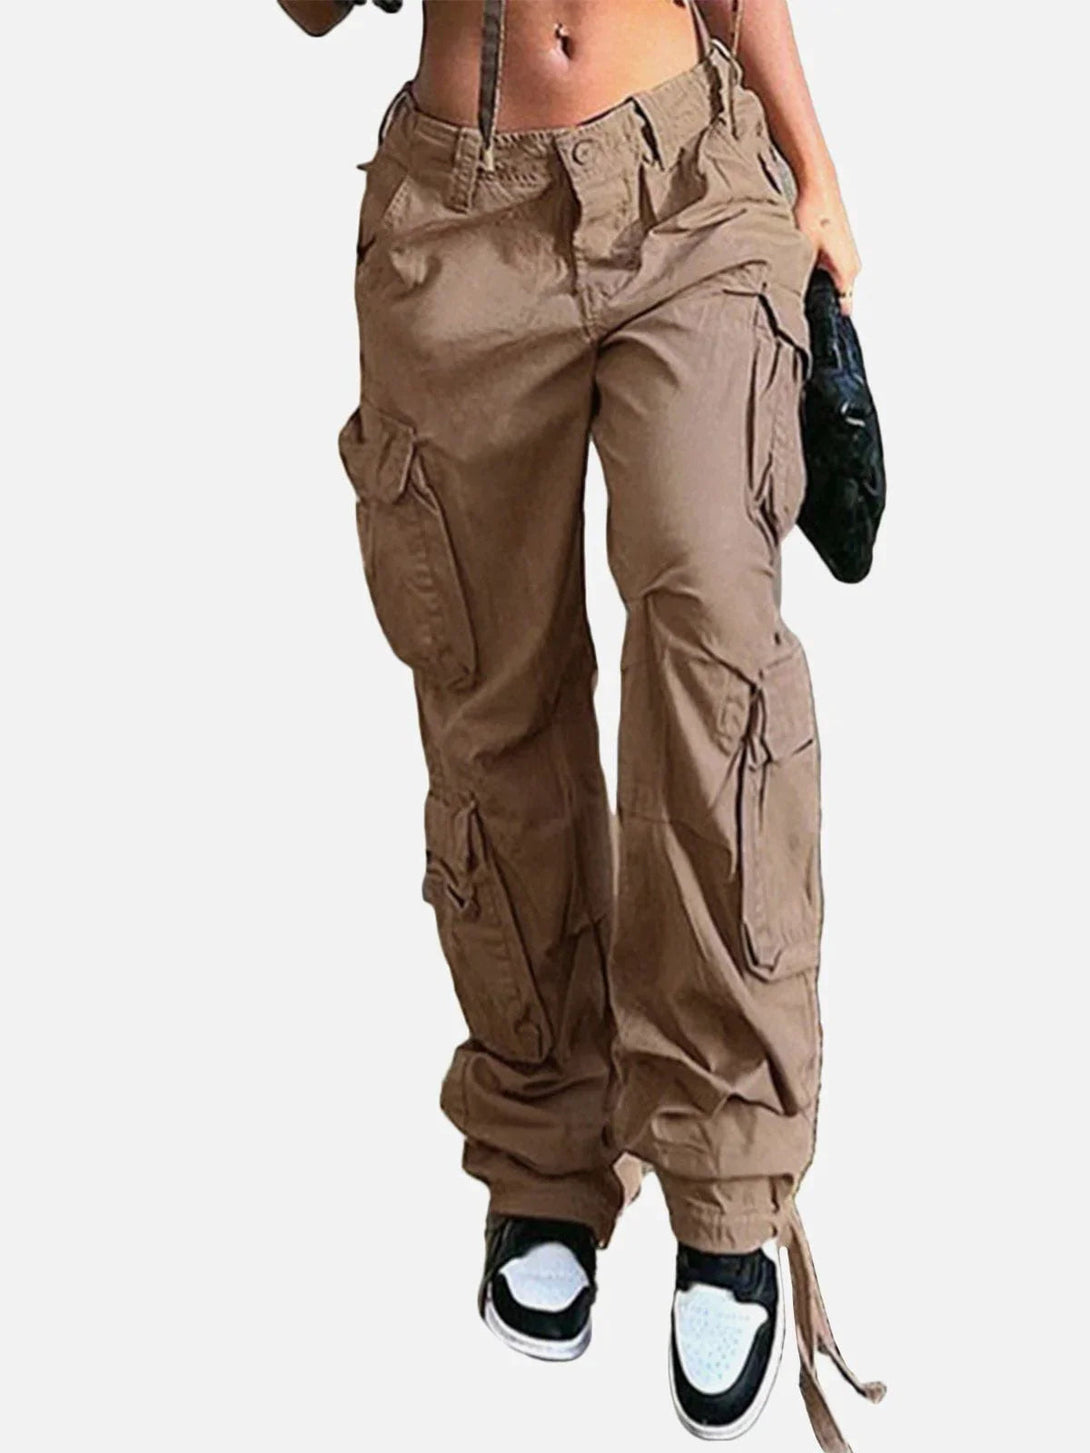 Majesda® - Long Ribbon Low Waist Cargo Pants outfit ideas streetwear fashion